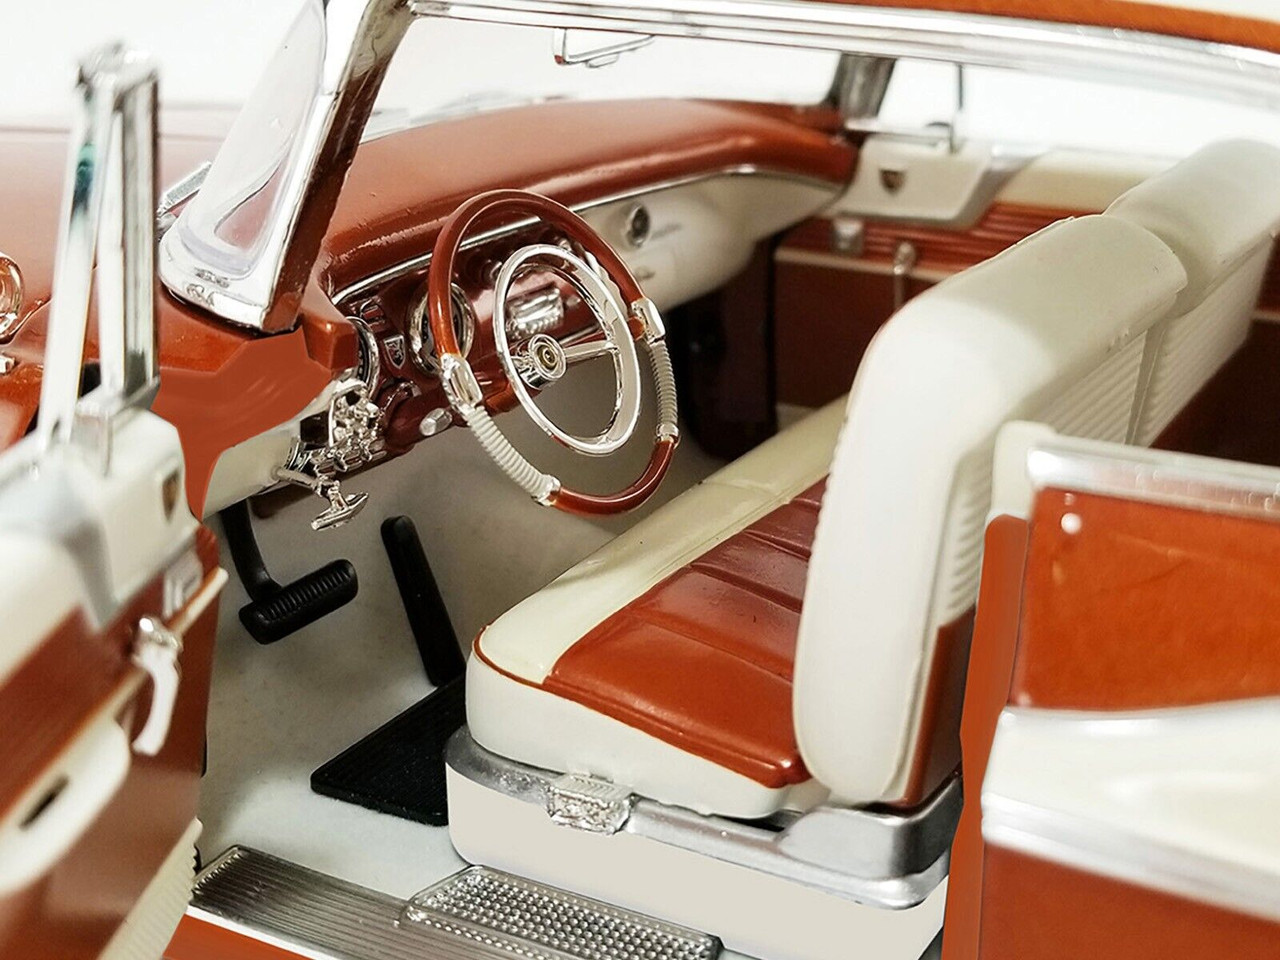 1/18 ACME 1956 Chrysler New Yorker  St. Regis Cruisers Southern Kings Customs (Copper Sunset Red) Diecast Car Model